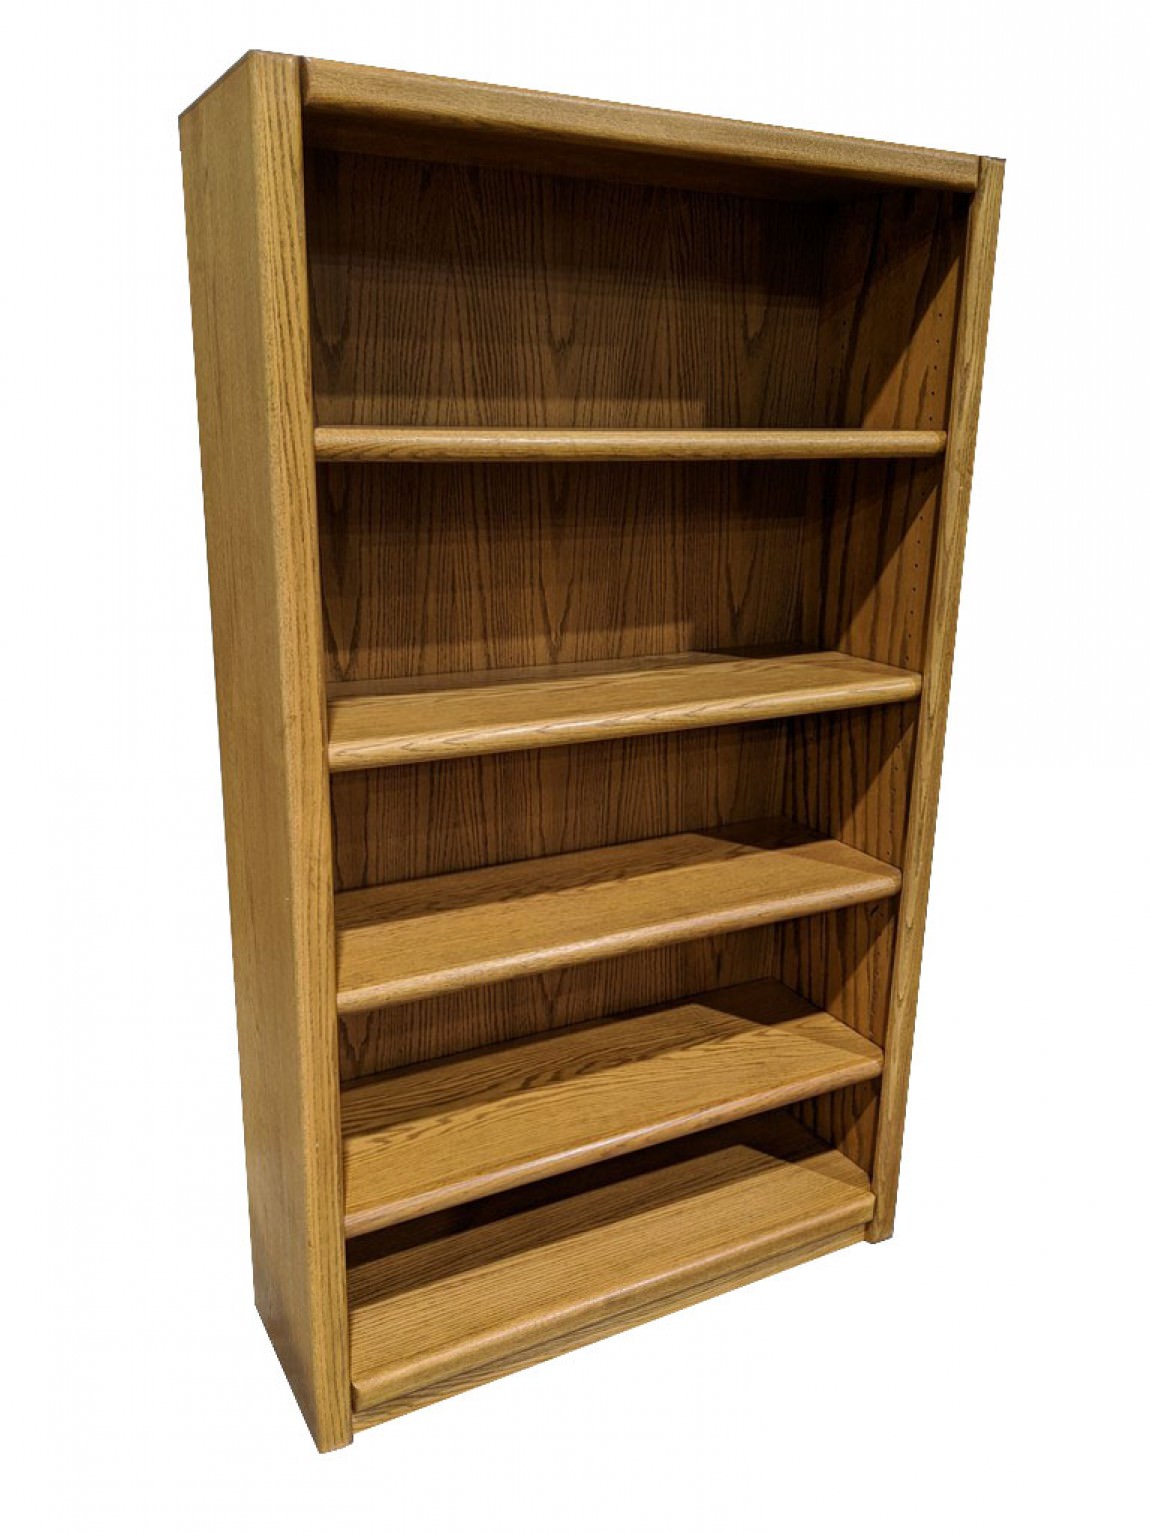 Solid Wood Bookshelf with Oak Finish - 36 Inch Wide